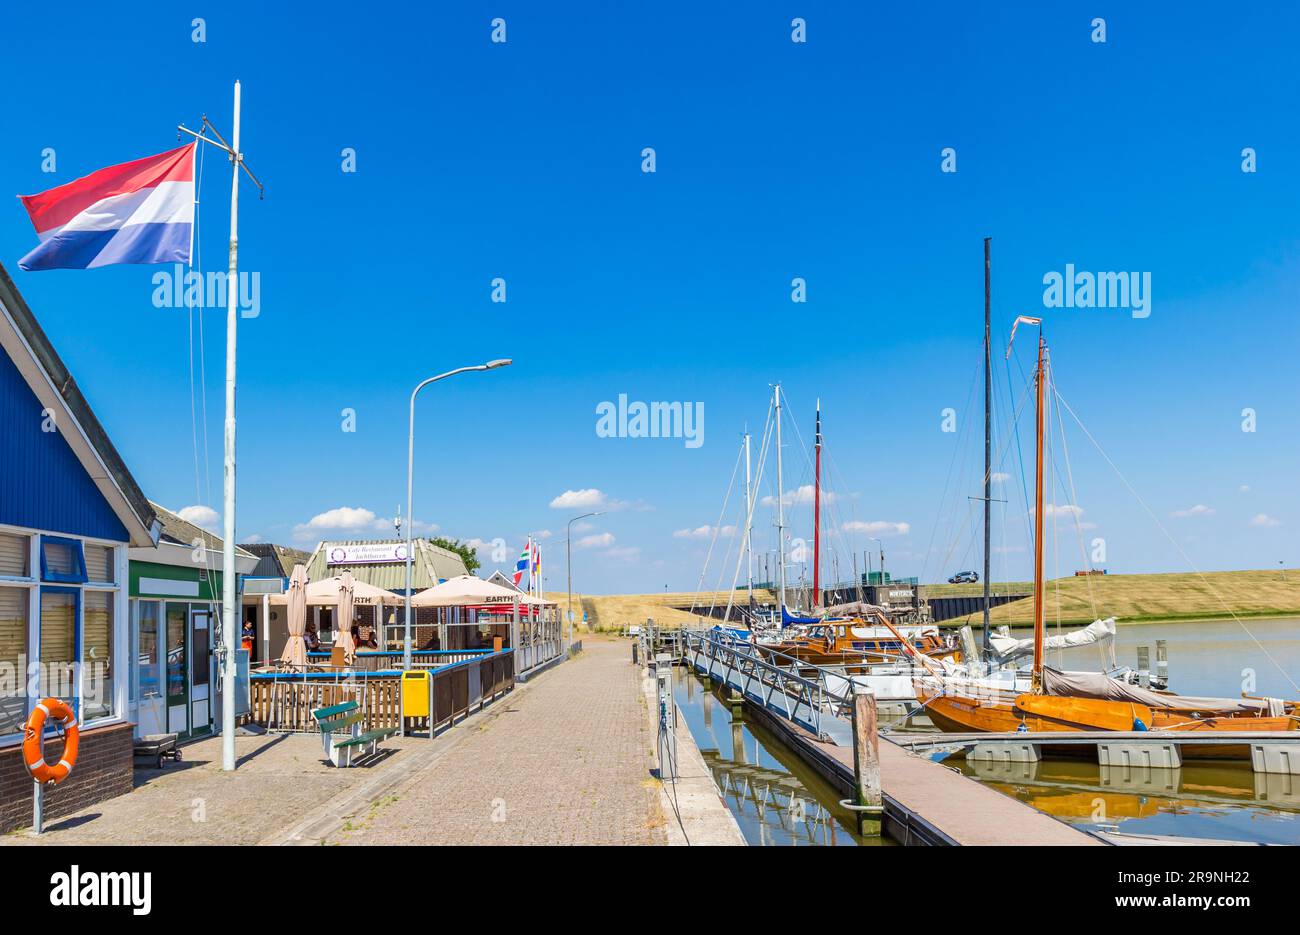 Restaurants and boats in the harbor of Termunterzijl, Netherlands Stock Photo